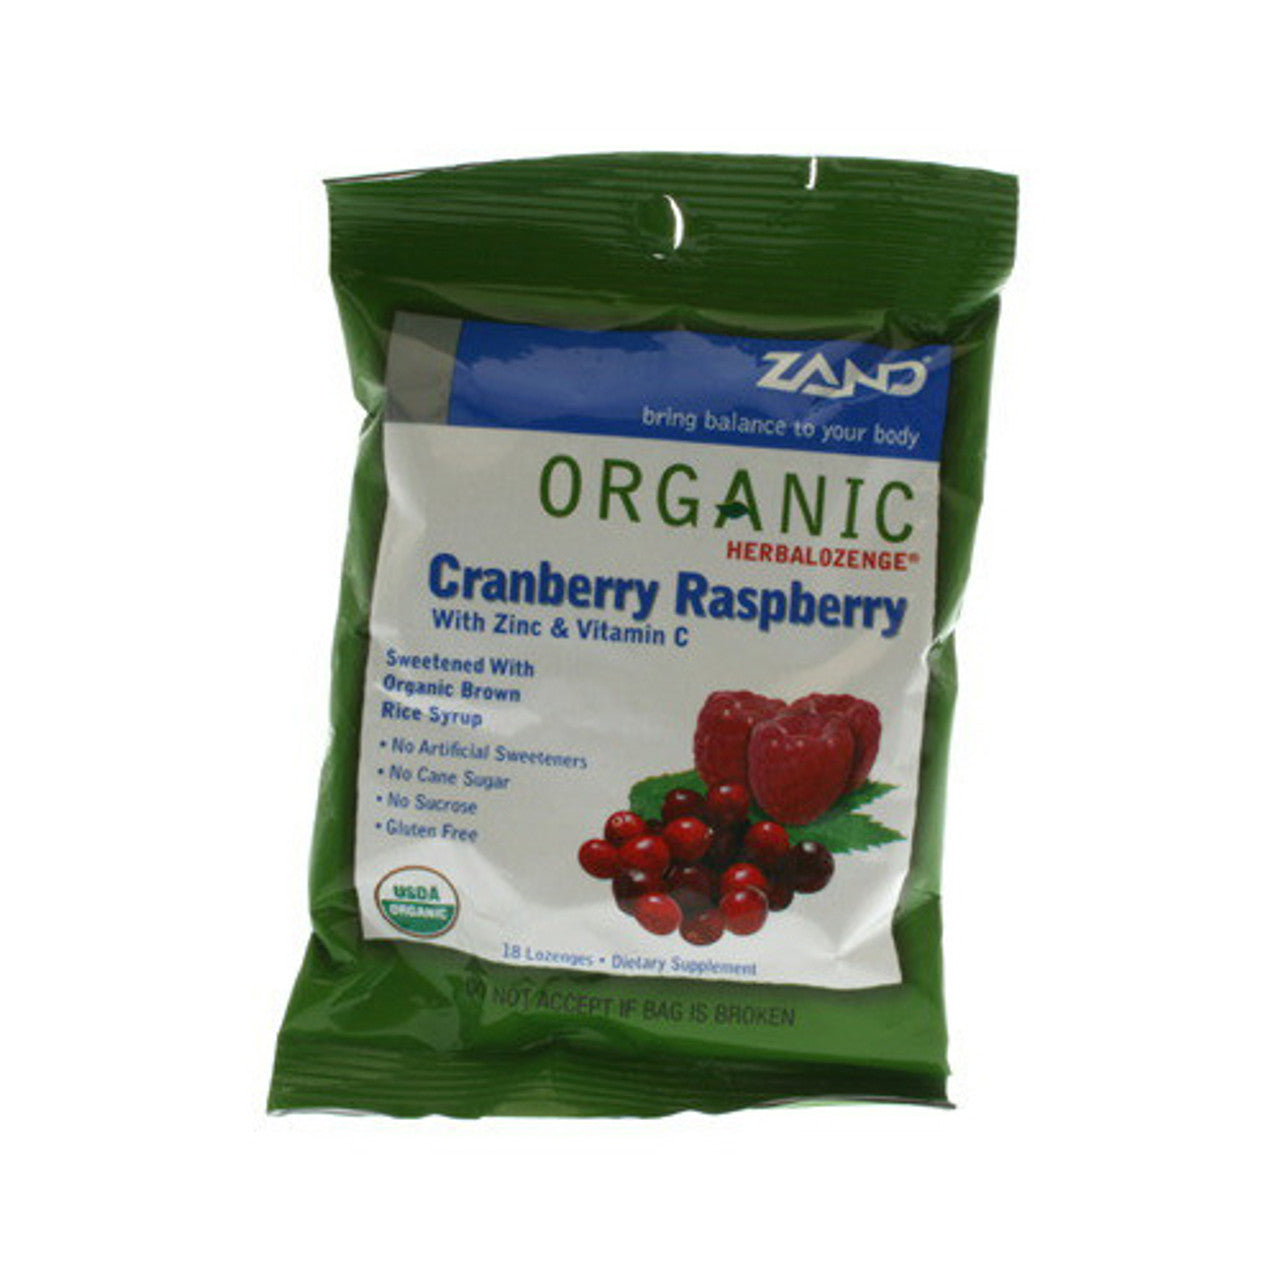 Zand Organic Cranberry Raspberry Herbalozenges - 18 Ea